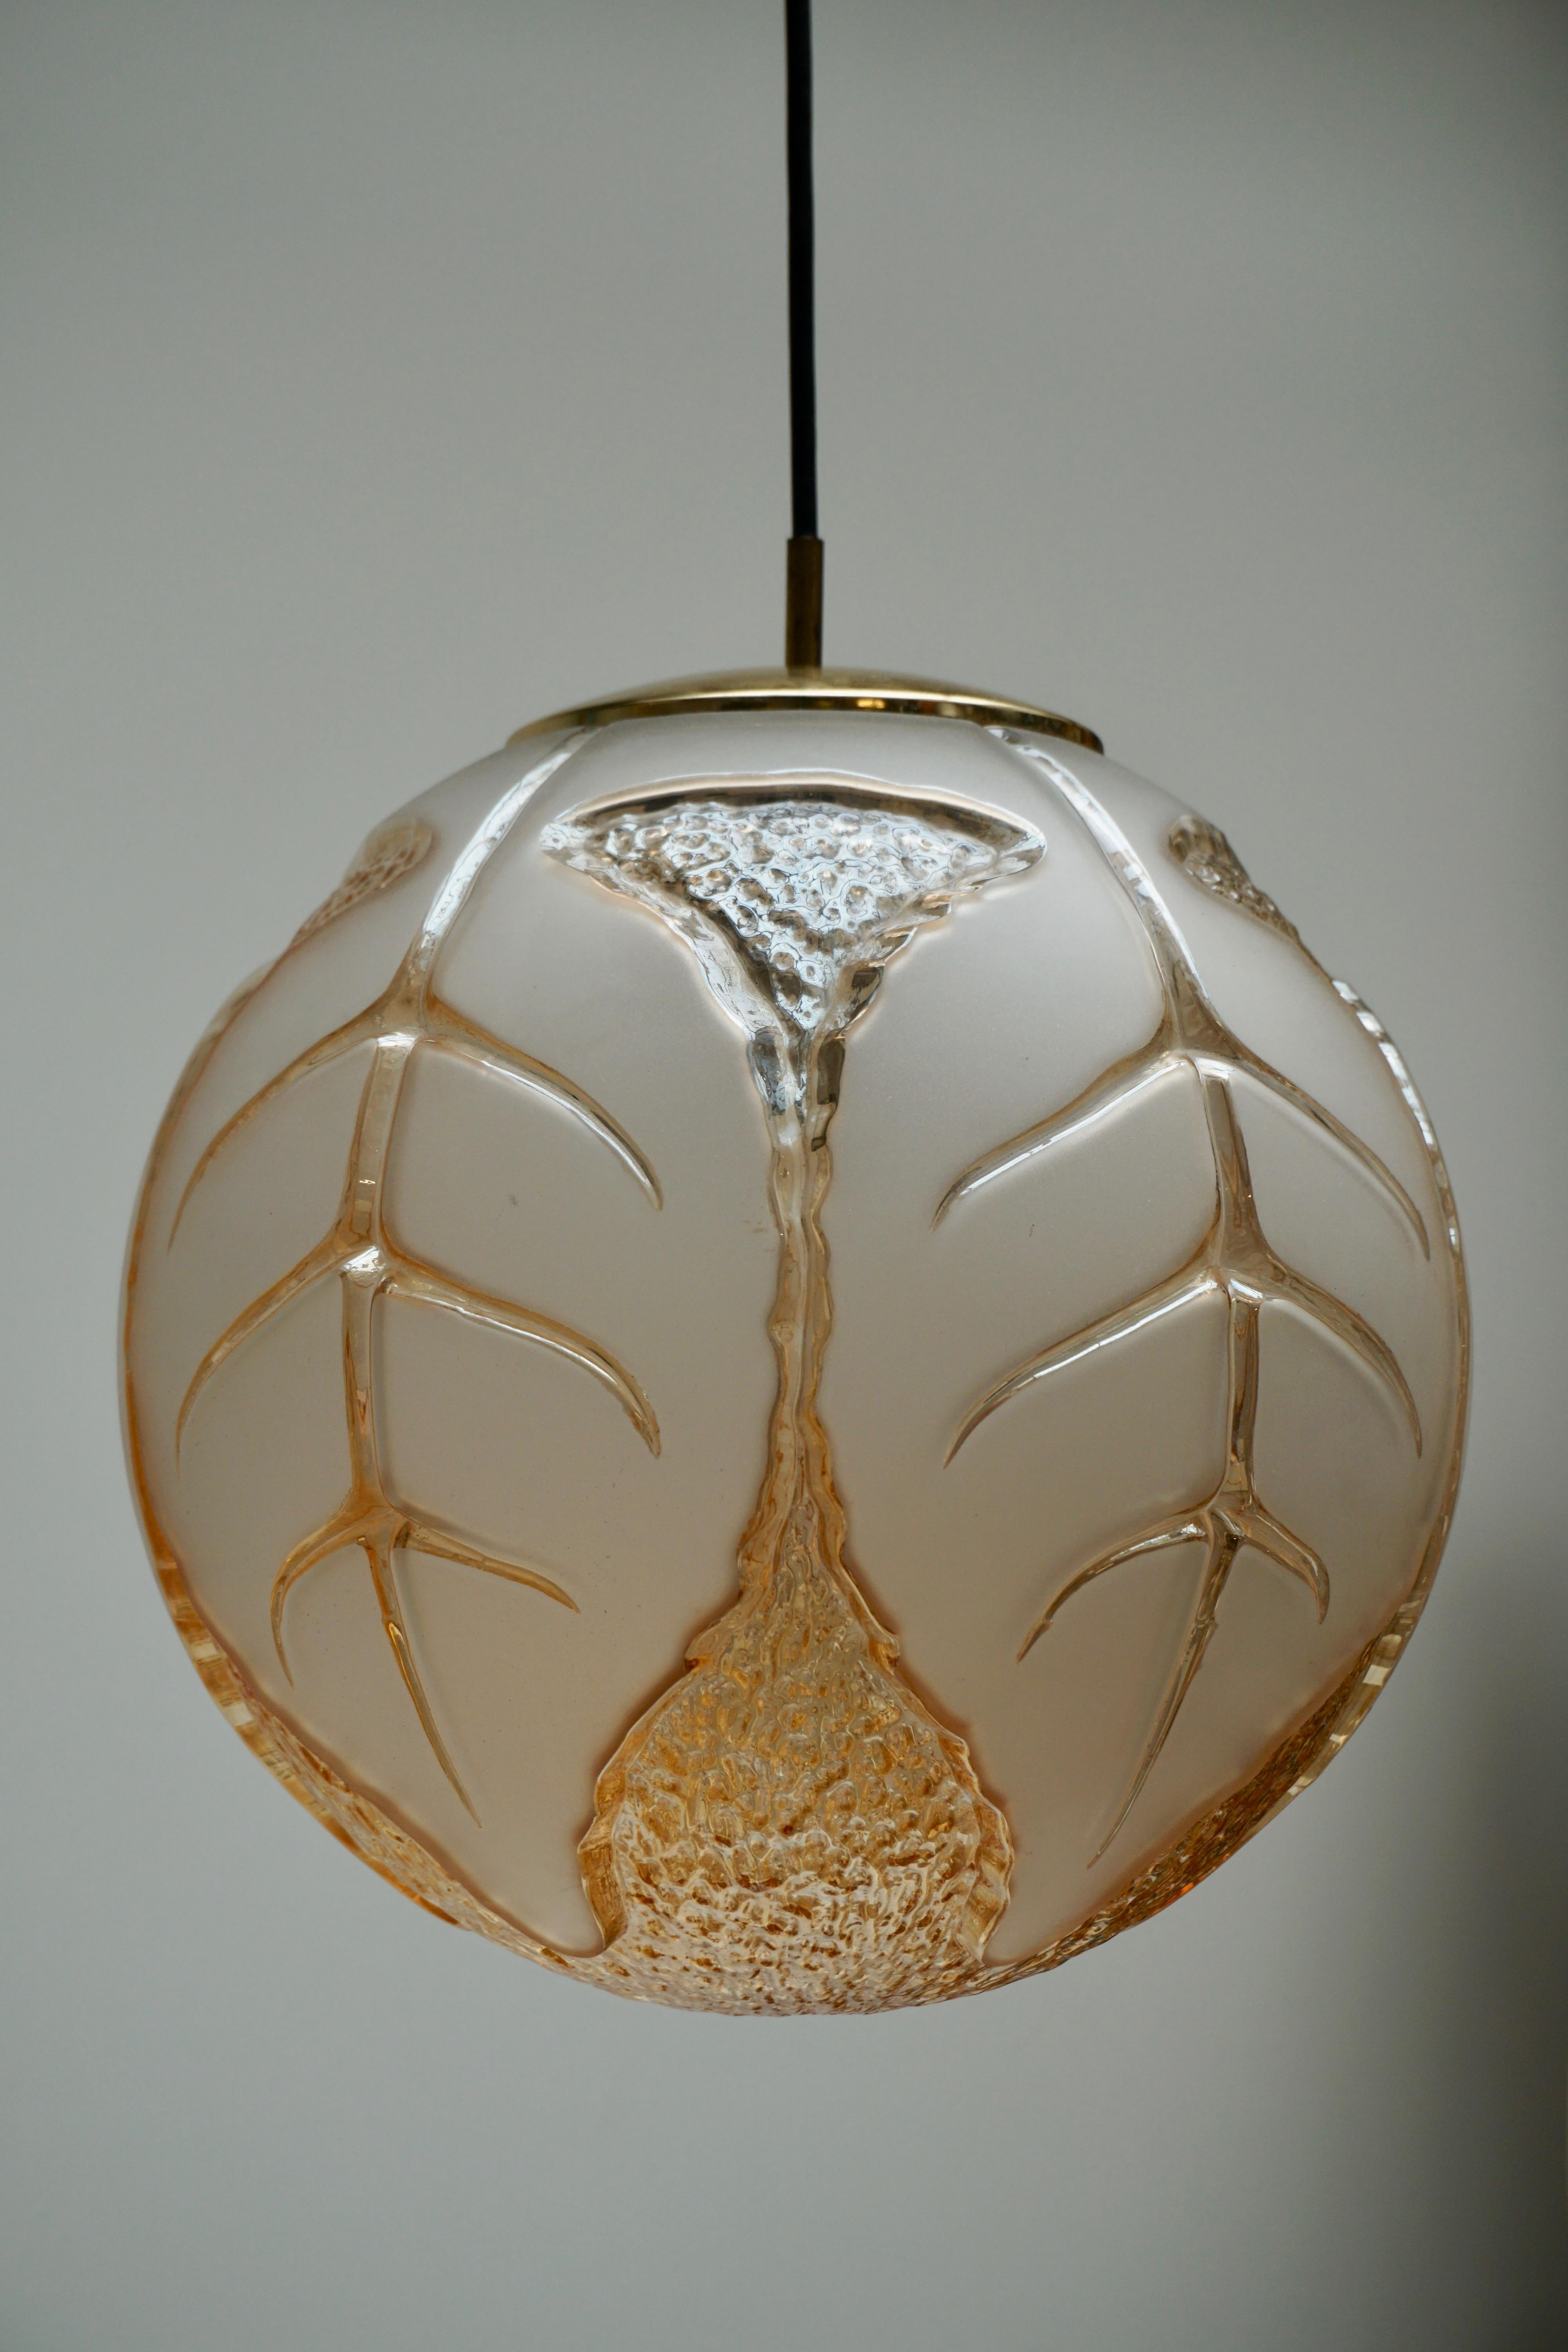 Italian Murano glass ceiling lamp.
Measures: Diameter 37 cm.
Height 35 cm.
Total height 80 cm.